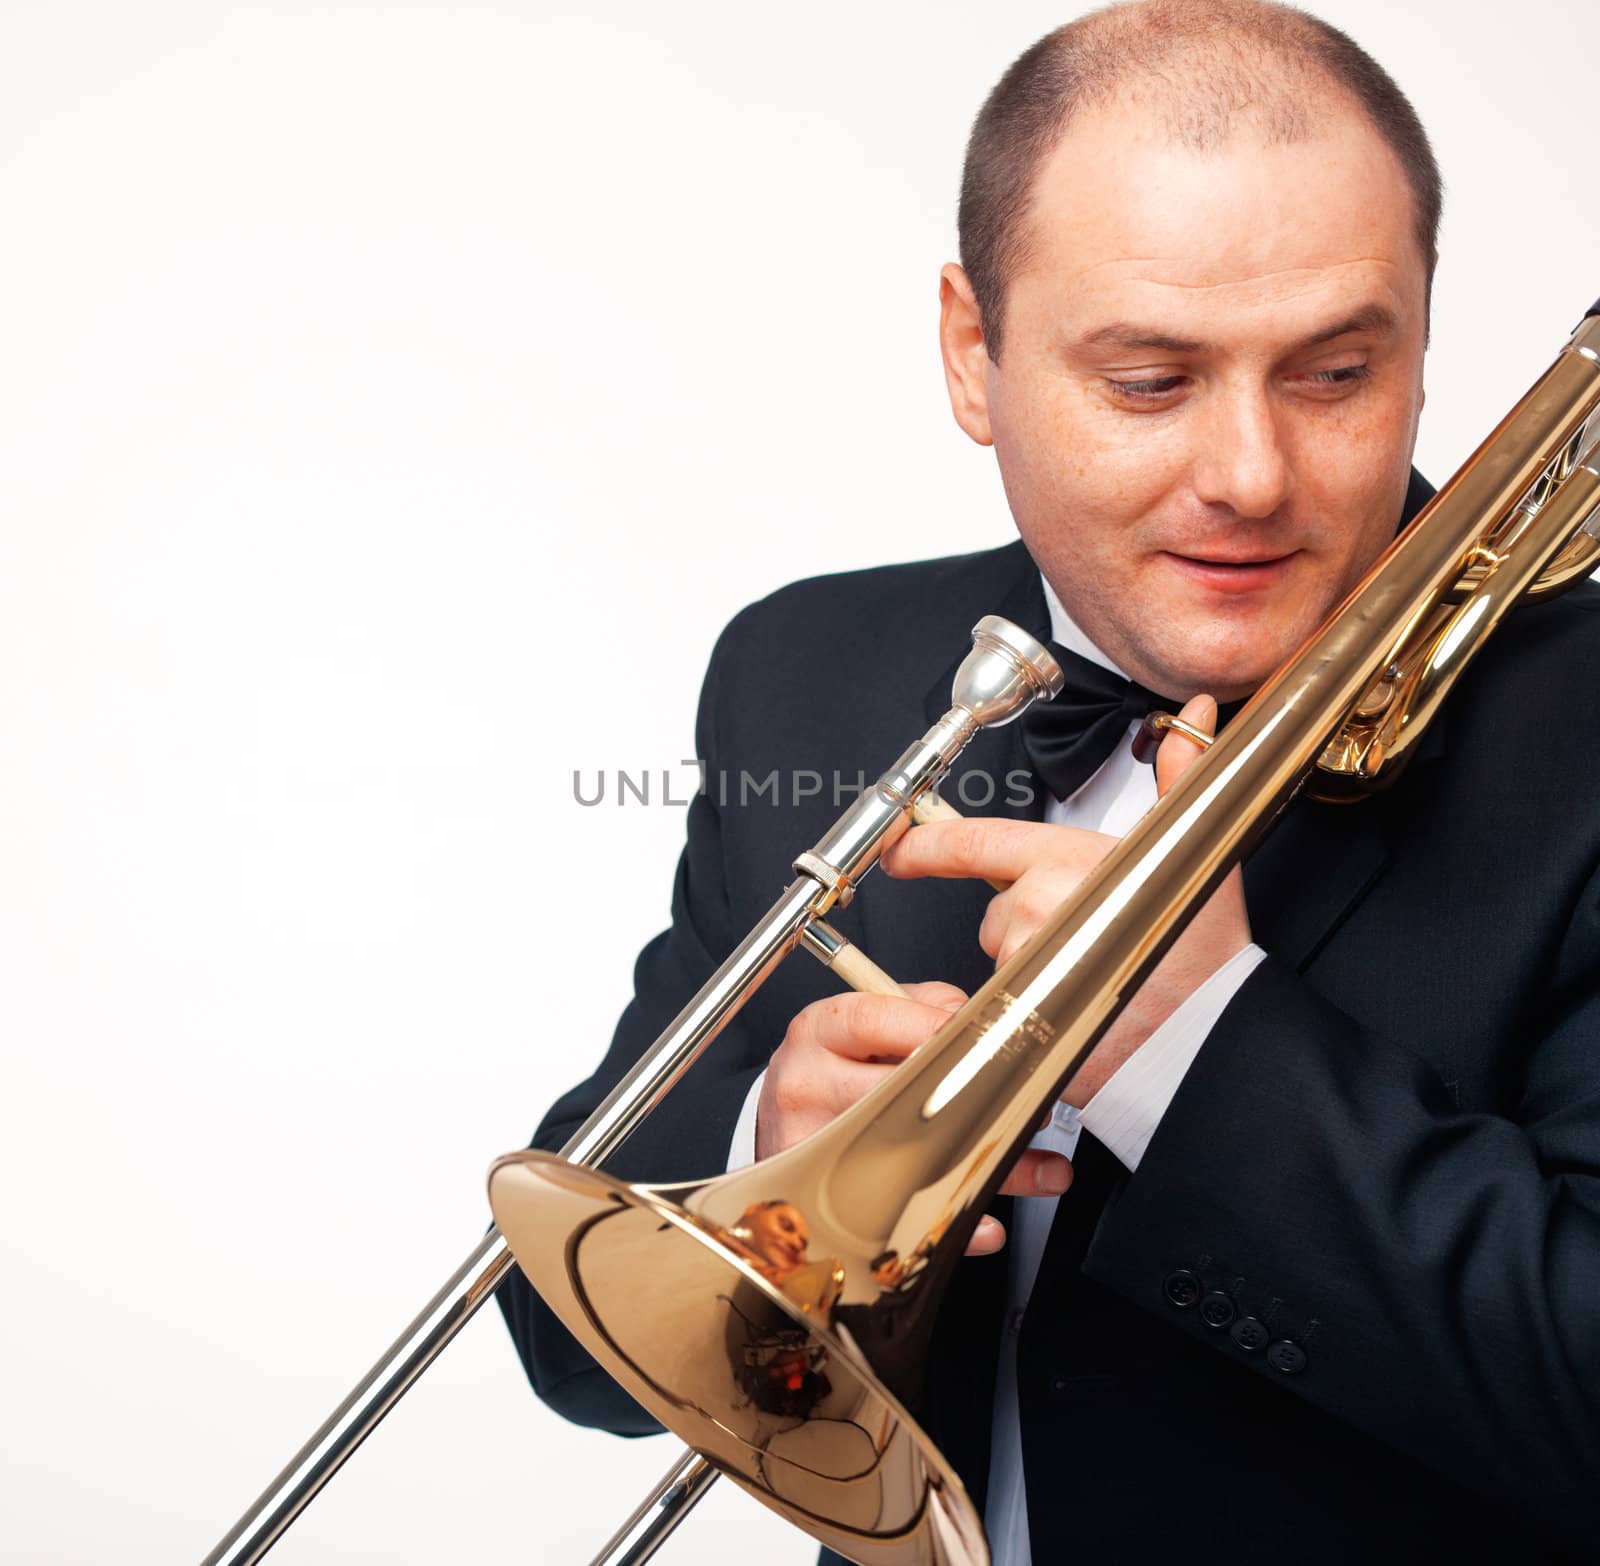 The Trombonist by romanshyshak